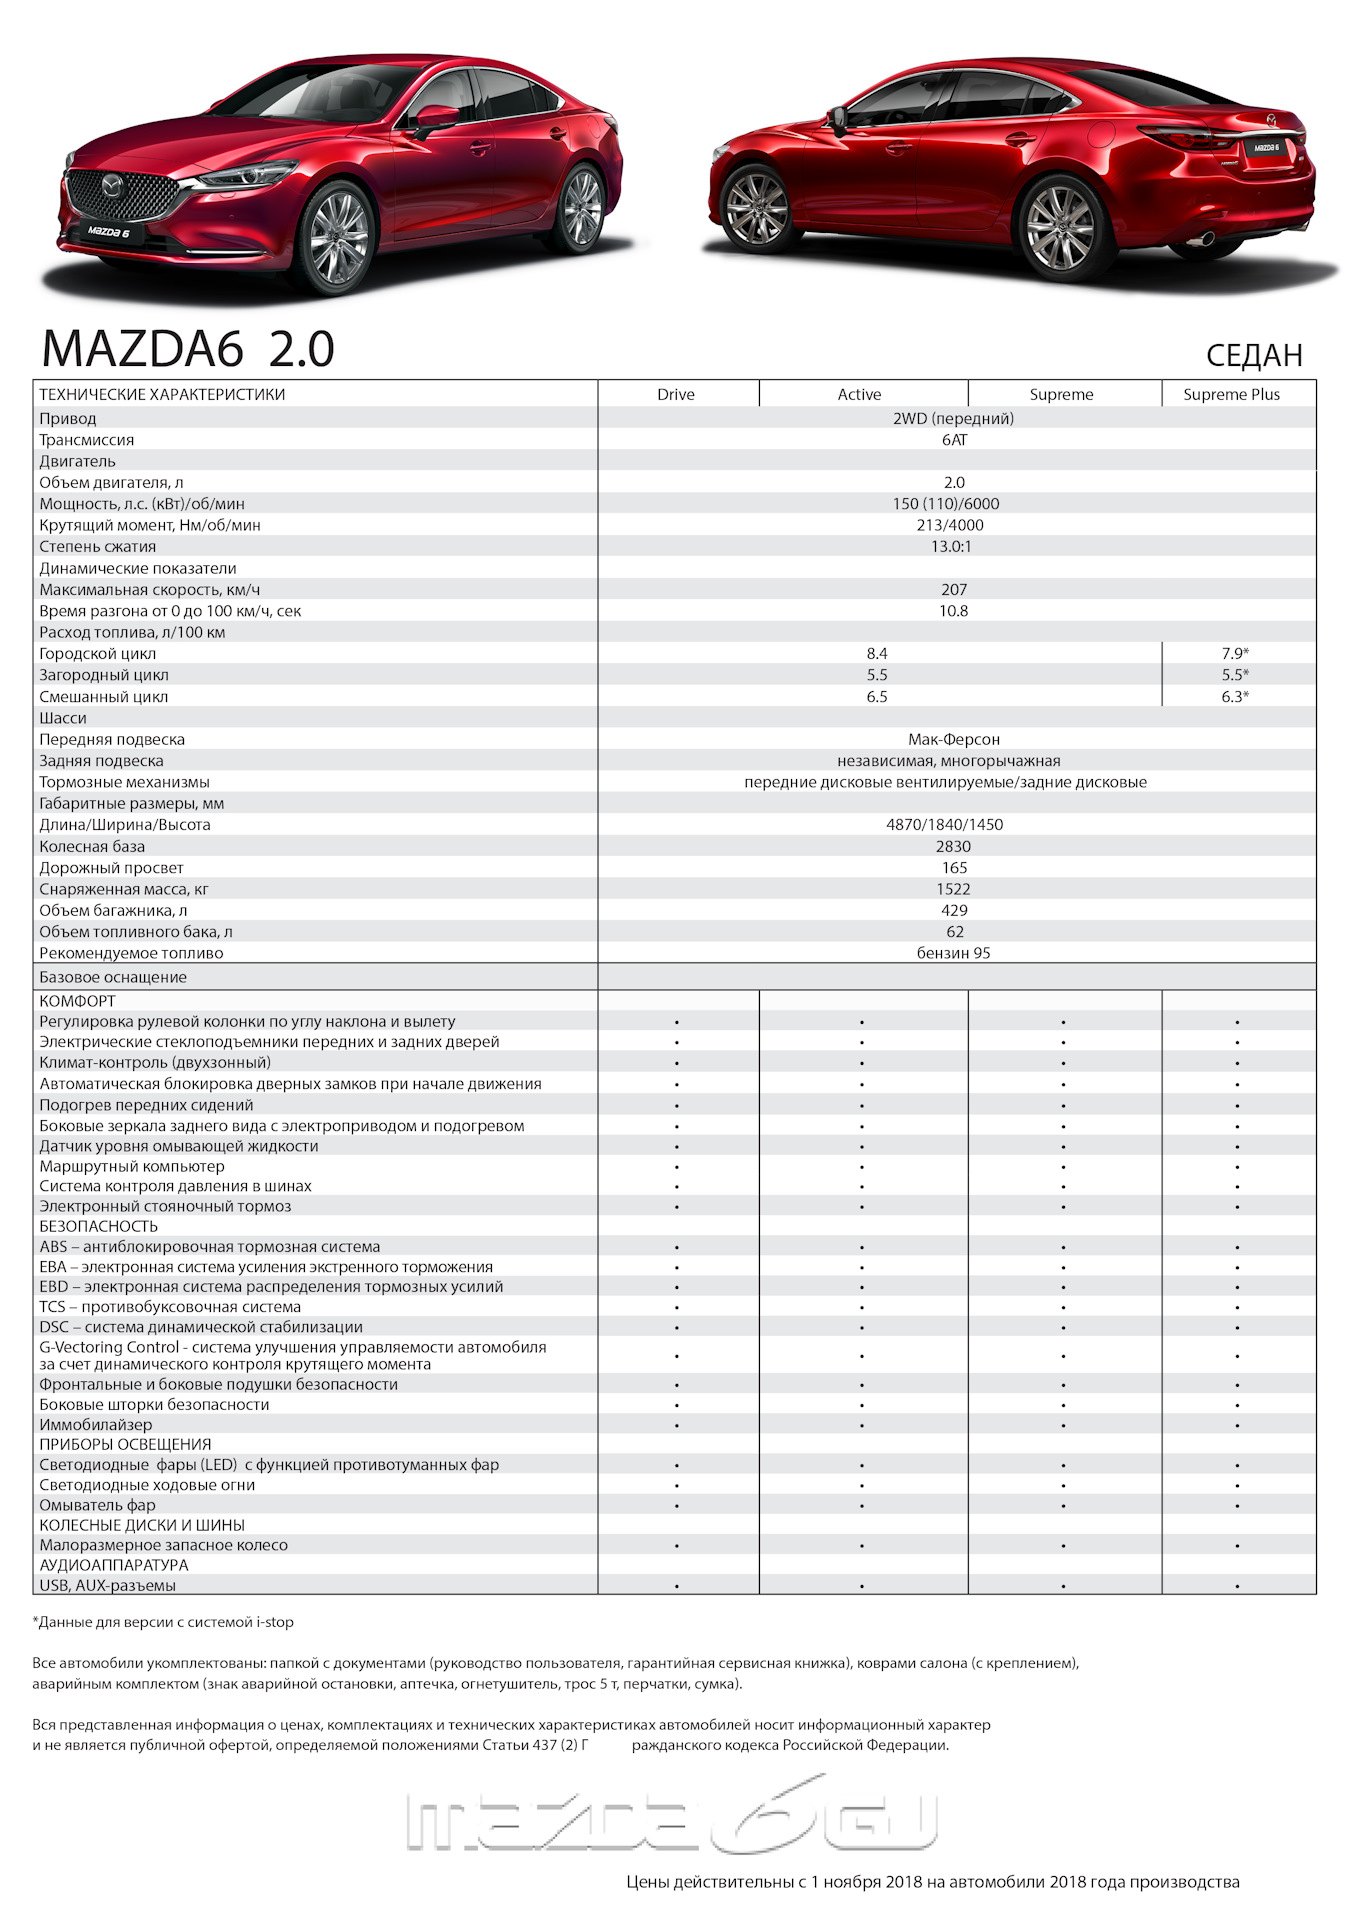 Информация о технических характеристиках. Мазда 6 технические характеристики. Мазда 6 таблица комплектаций. Габариты Мазда 6 GH седан. Mazda 6 технические характеристики.